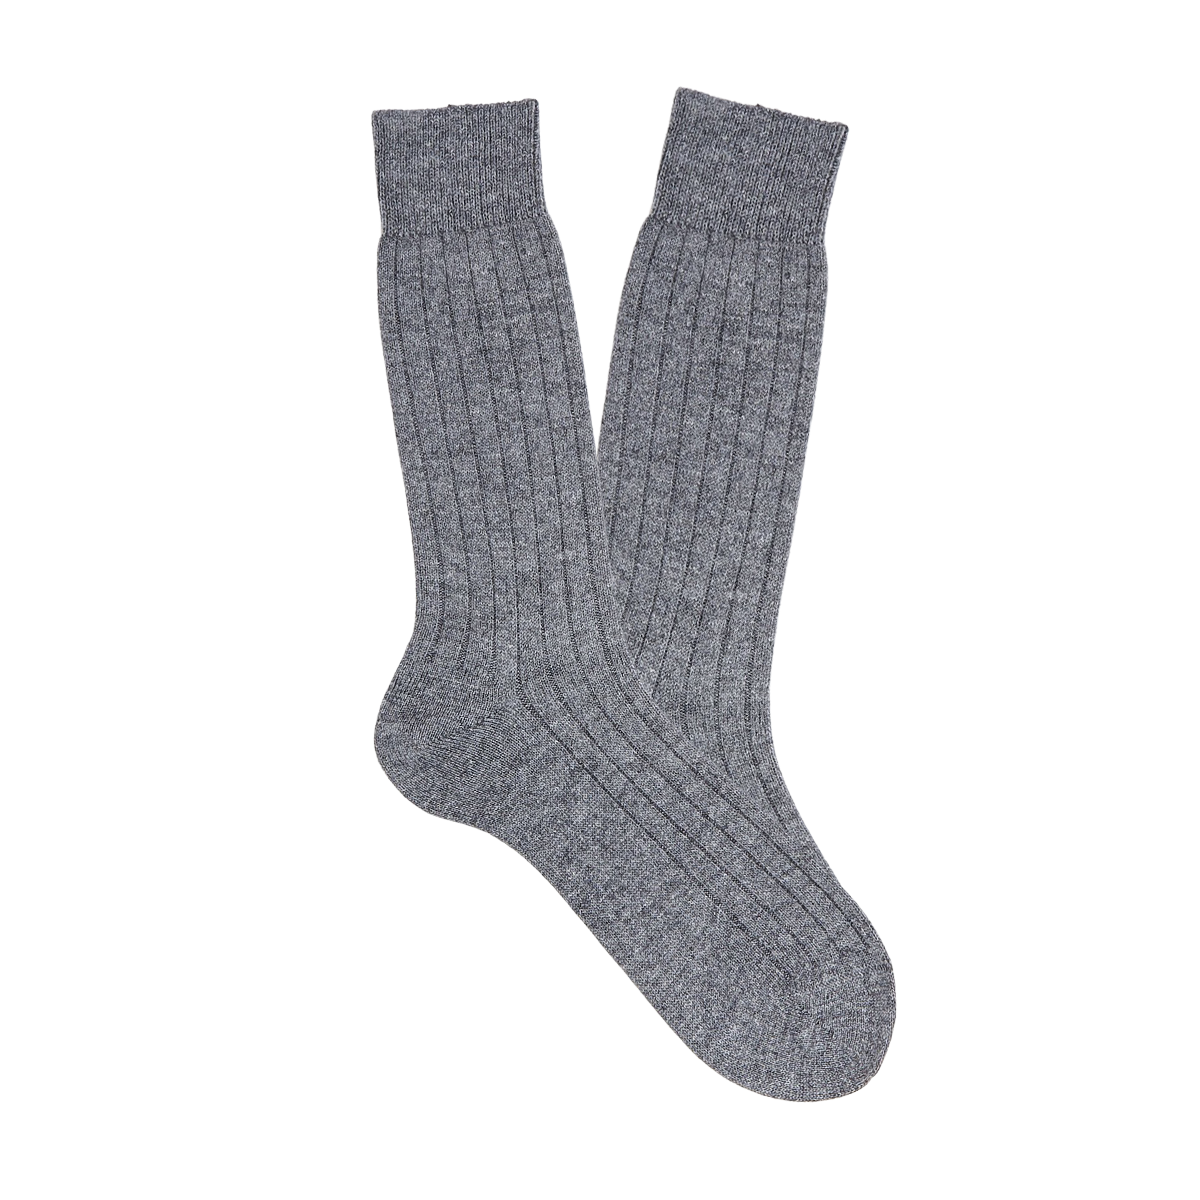 Bresciani Grey Melange Ribbed Wool Cashmere Socks Feature